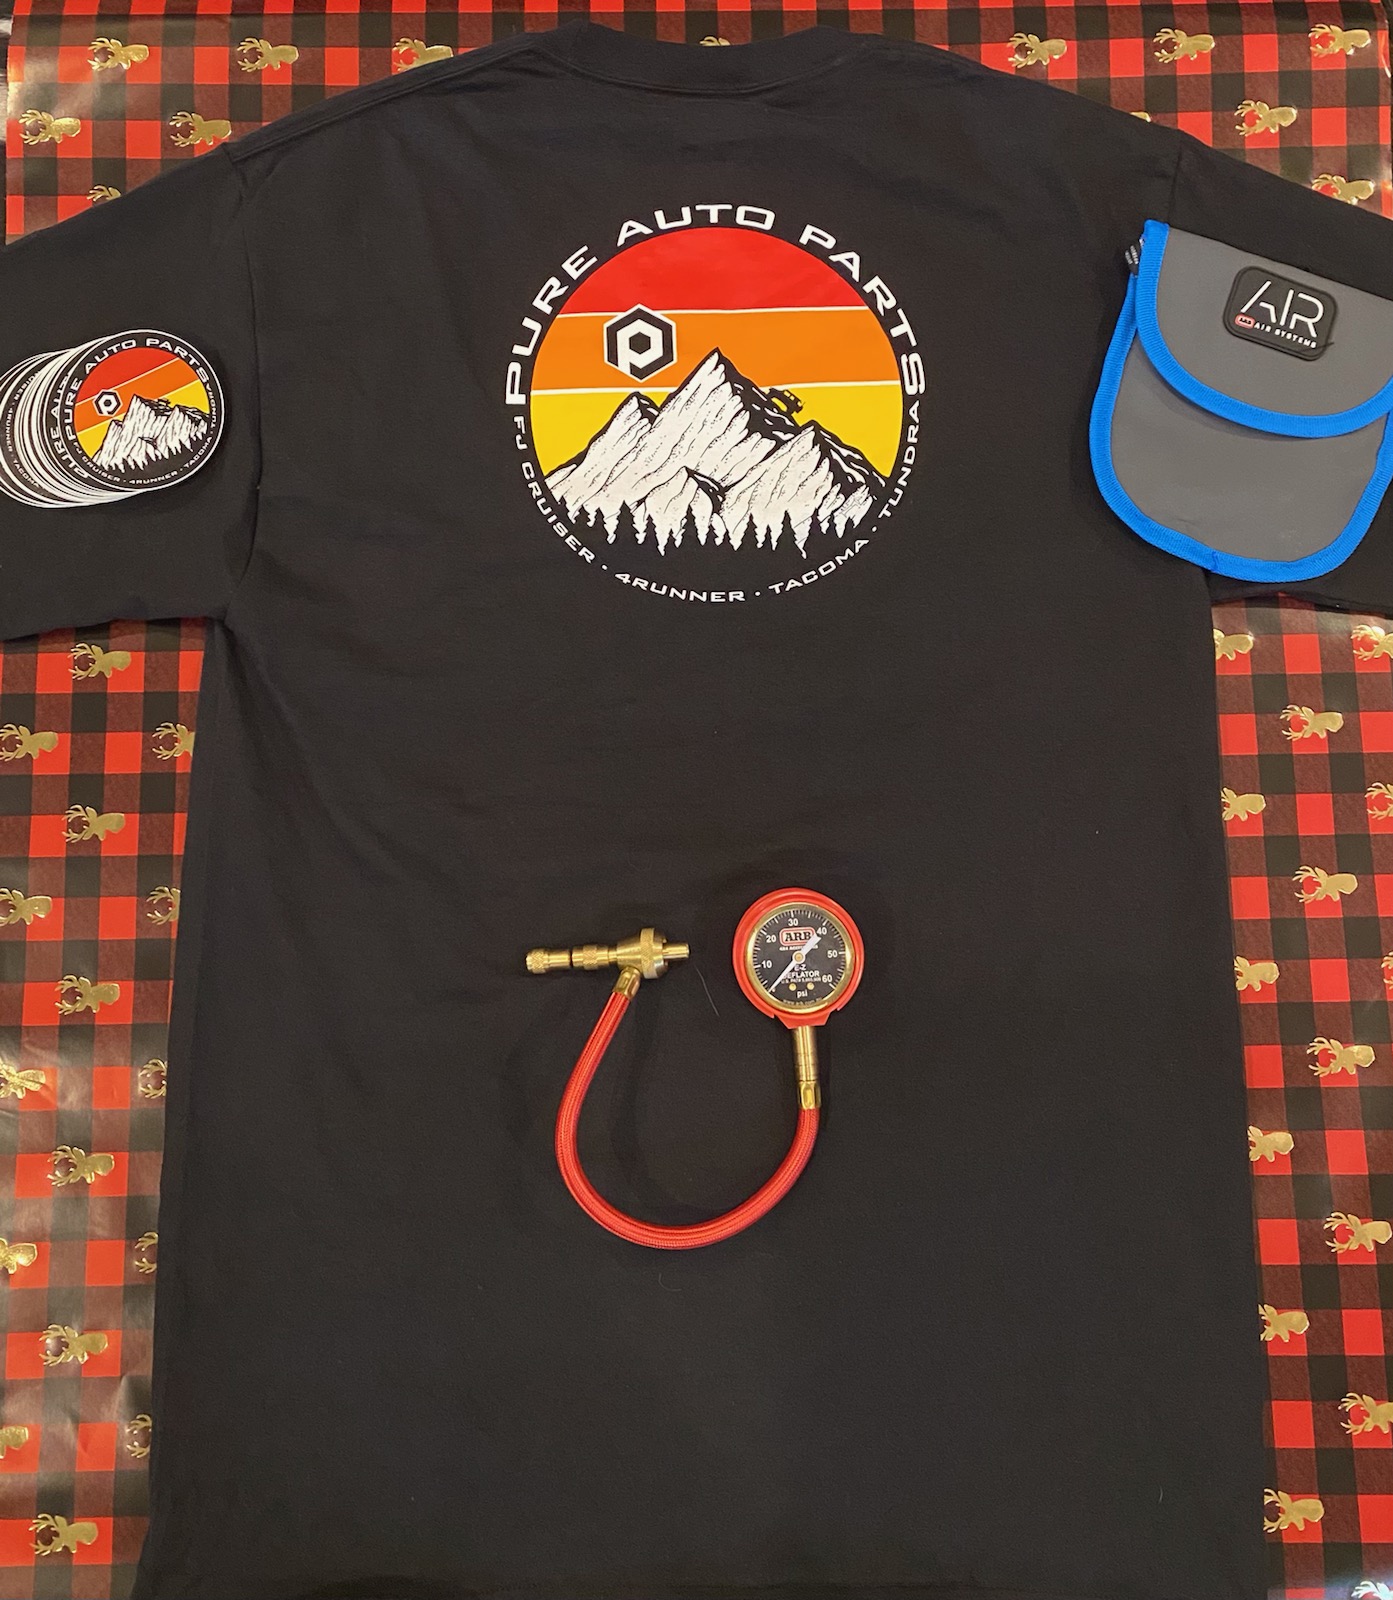 ARB Tire Deflator & Pure Tacoma Overlanding T-Shirt+Sticker Gift Set